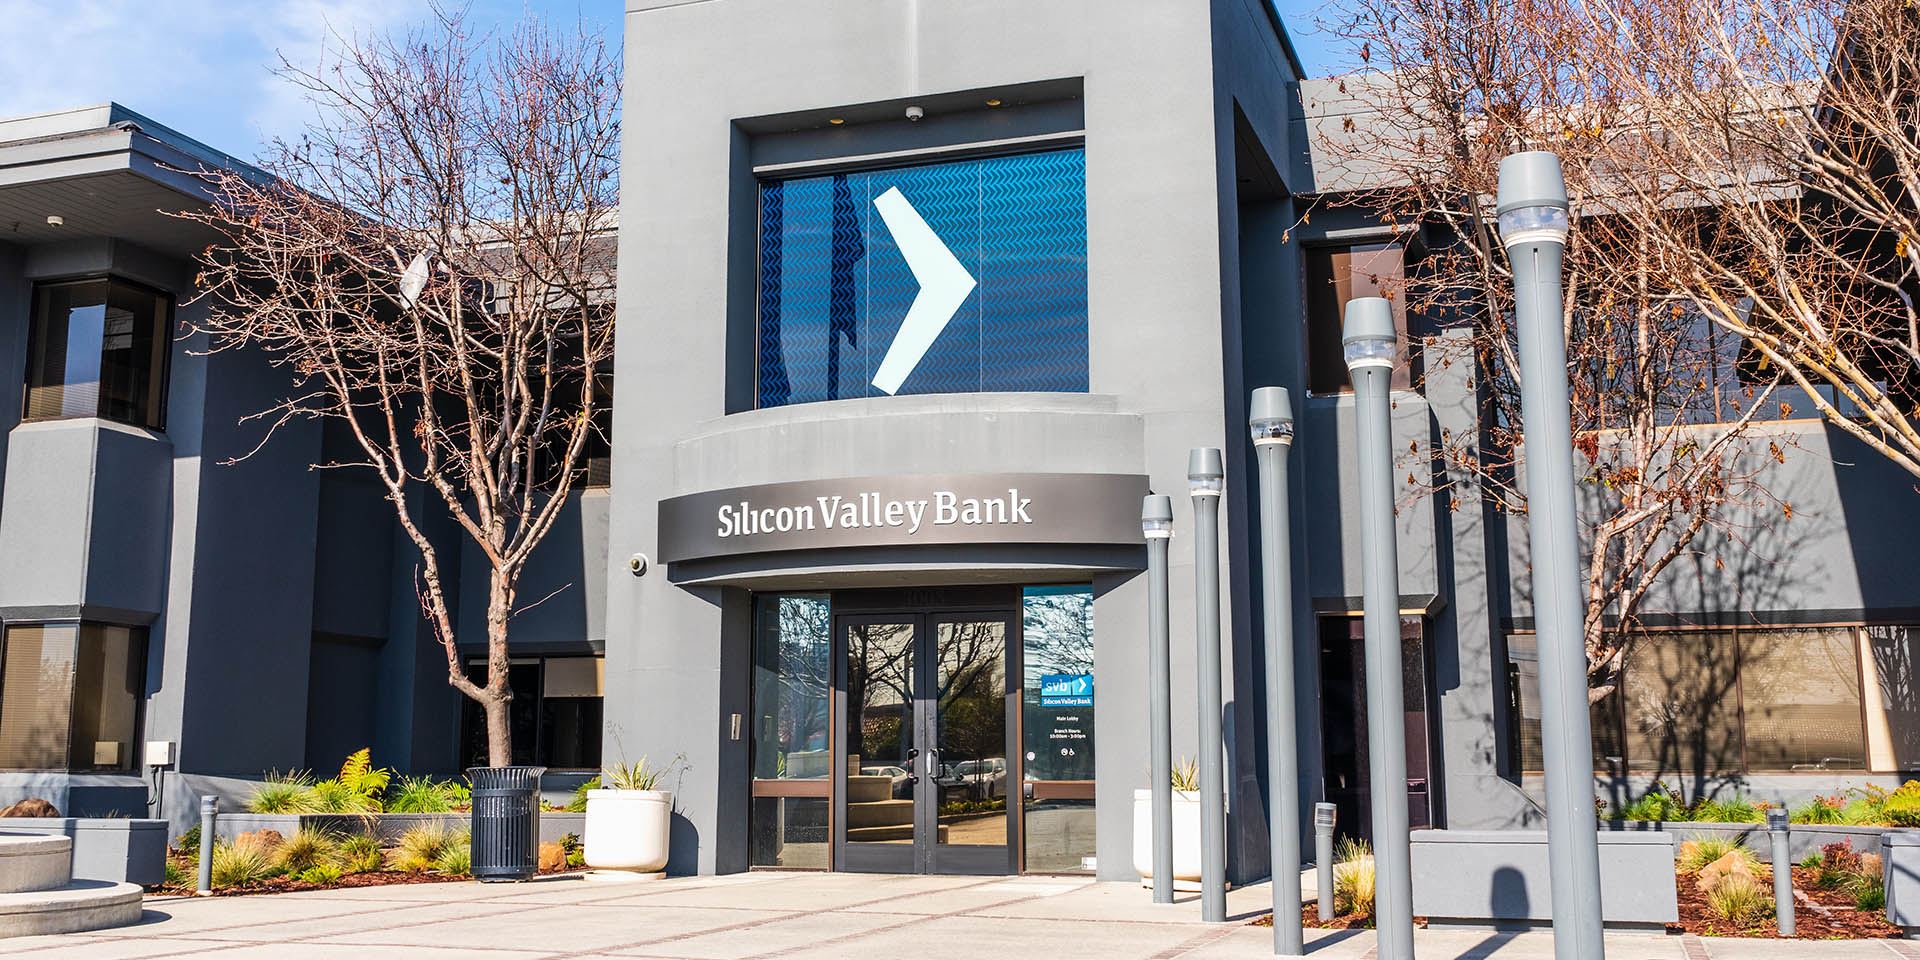 Renteverhogingscyclus nekt Silicon Valley Bank